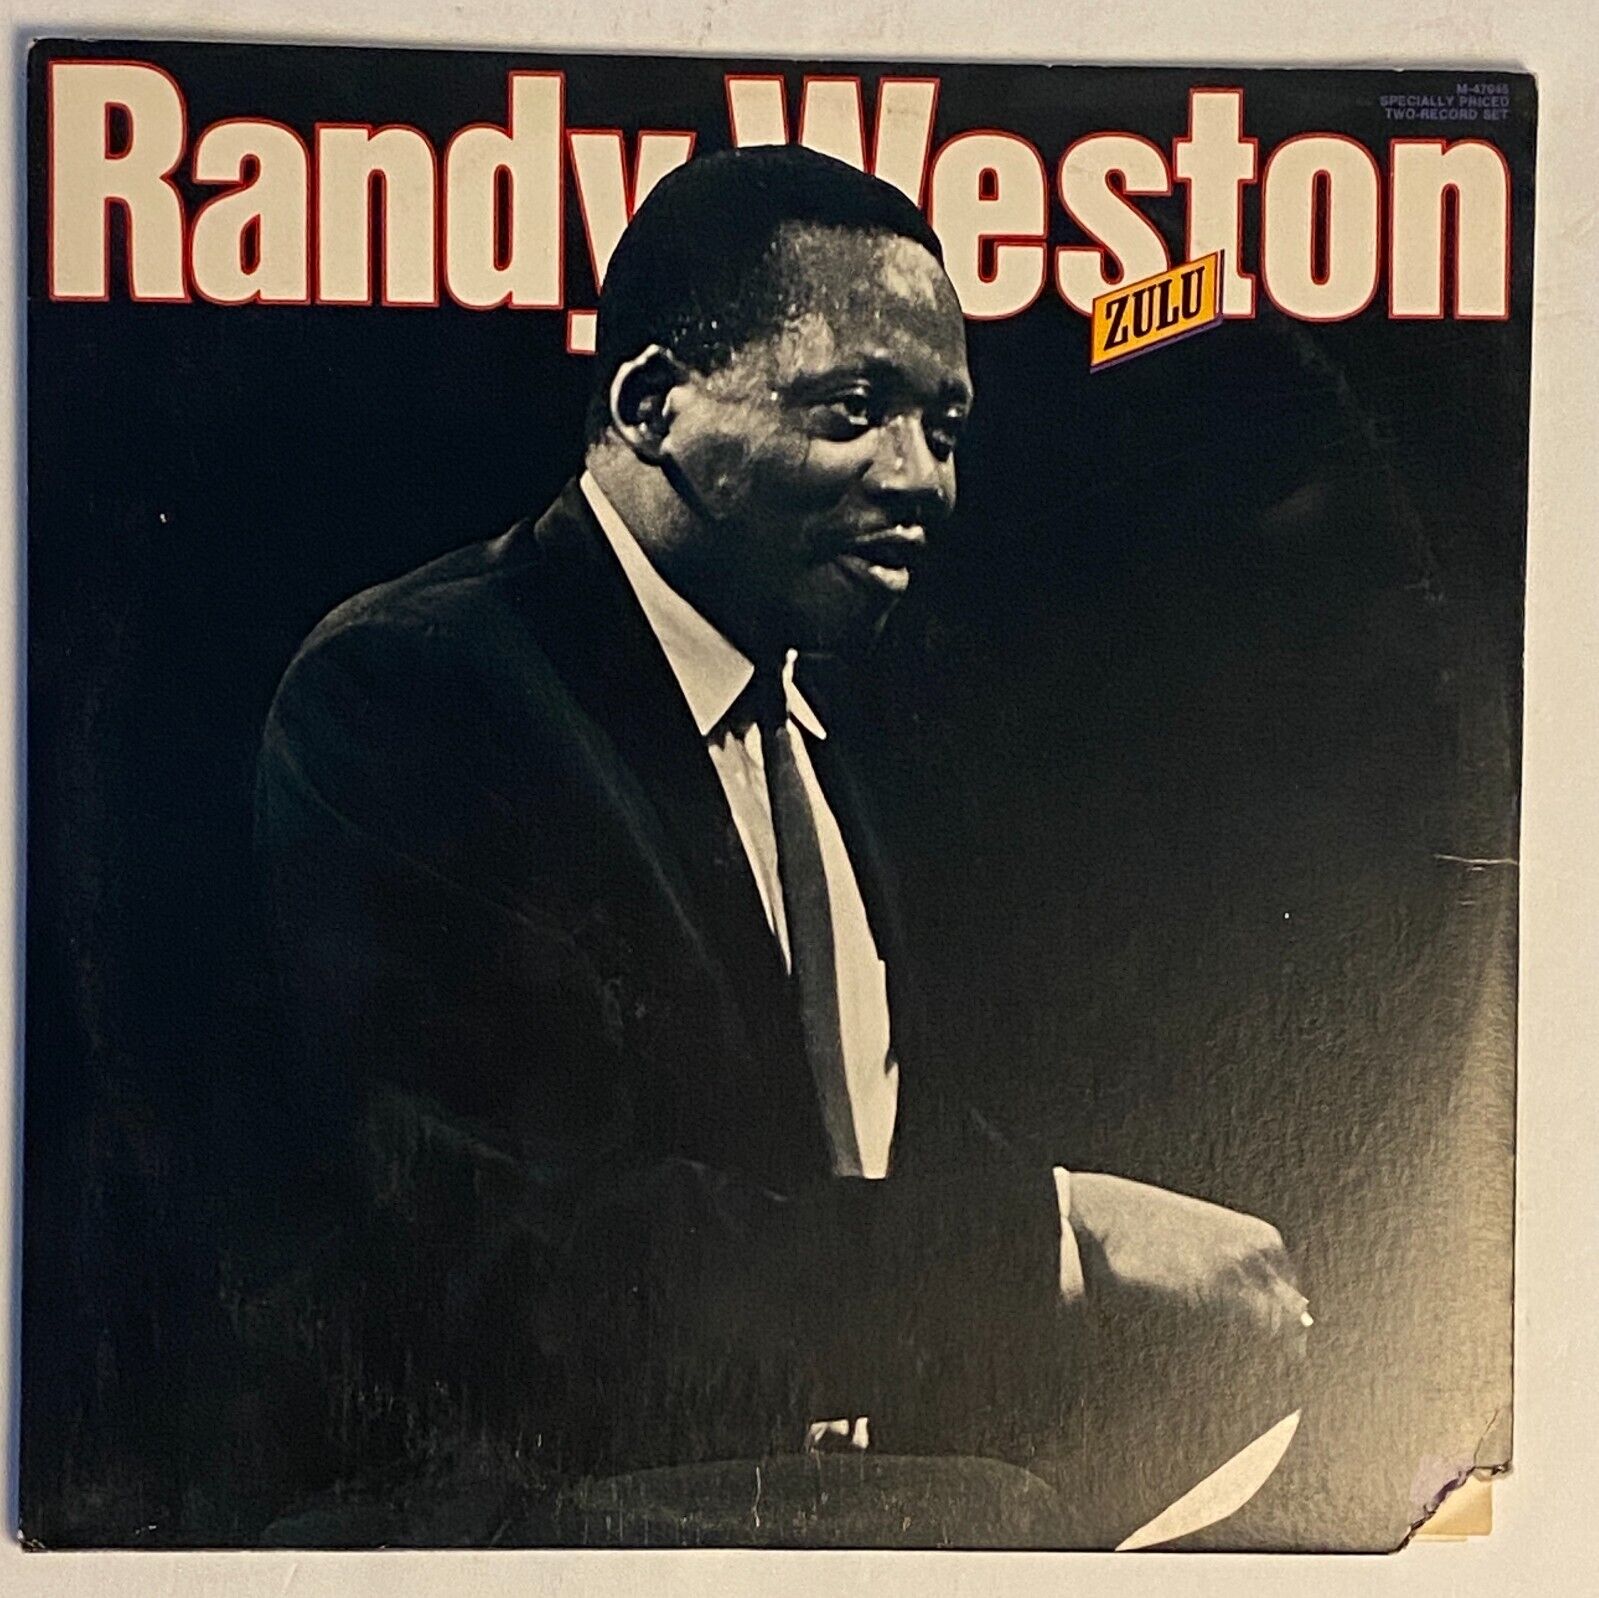 Randy Weston  Zulu  1977  Double LP  Milestone  M-47045  Jazz Compilation  EX